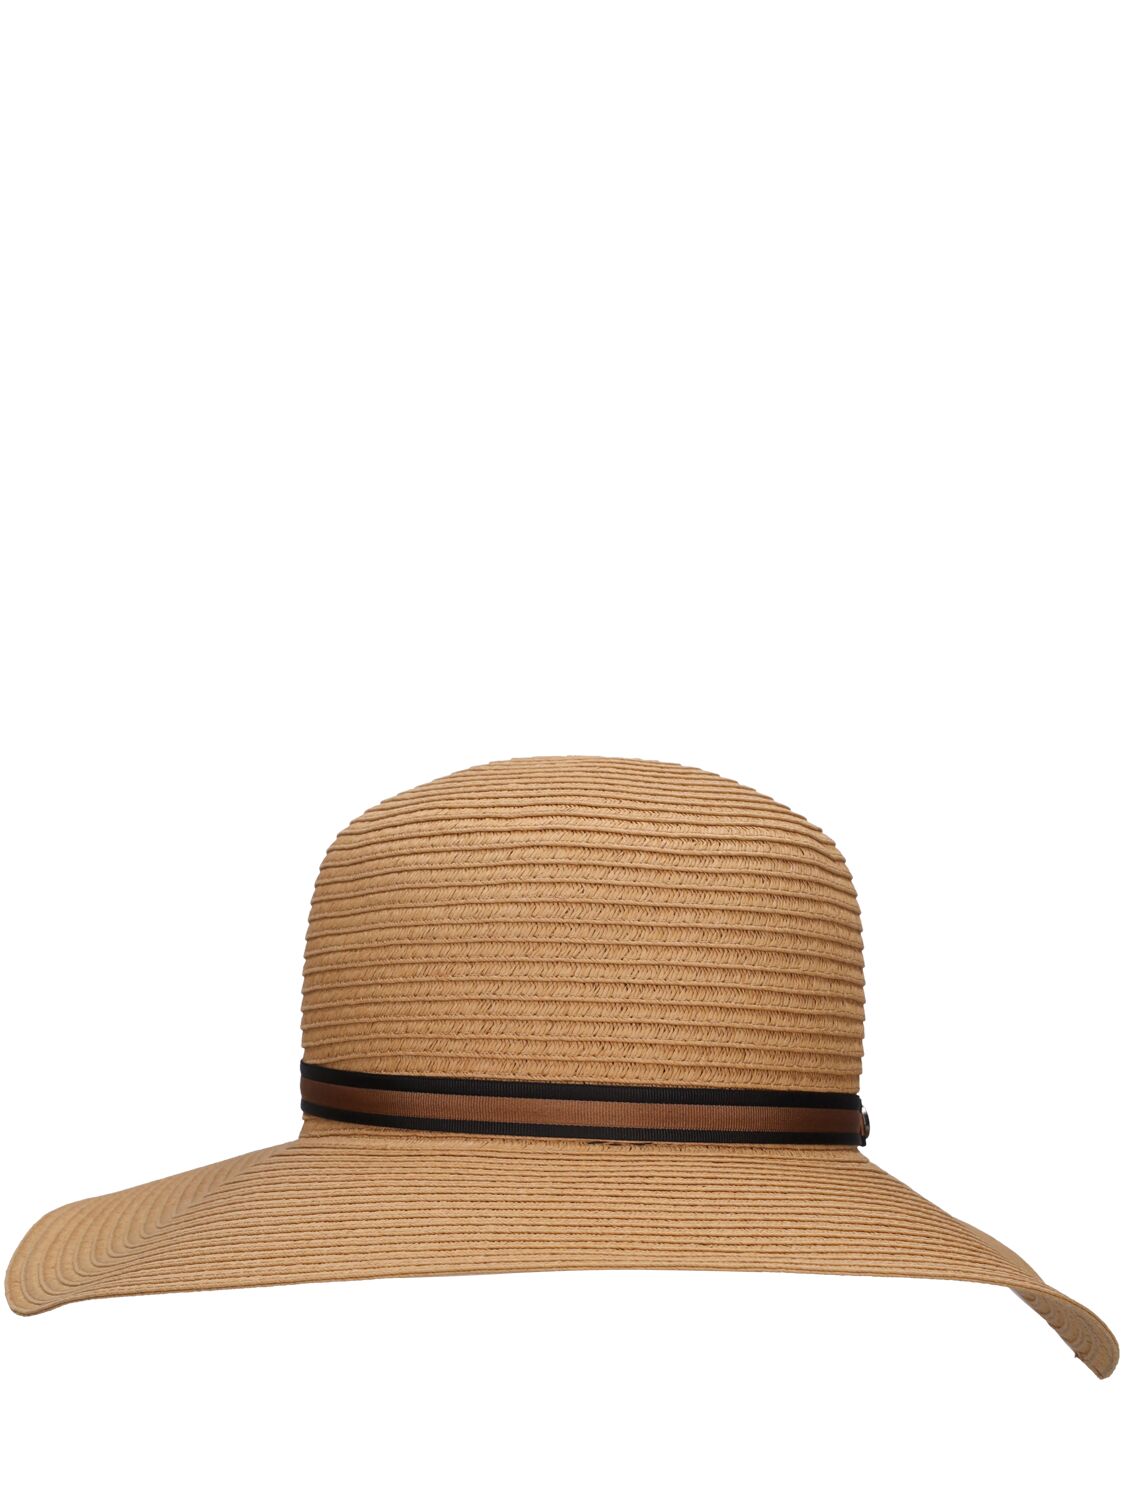 Image of Giselle Foldable Straw Hat